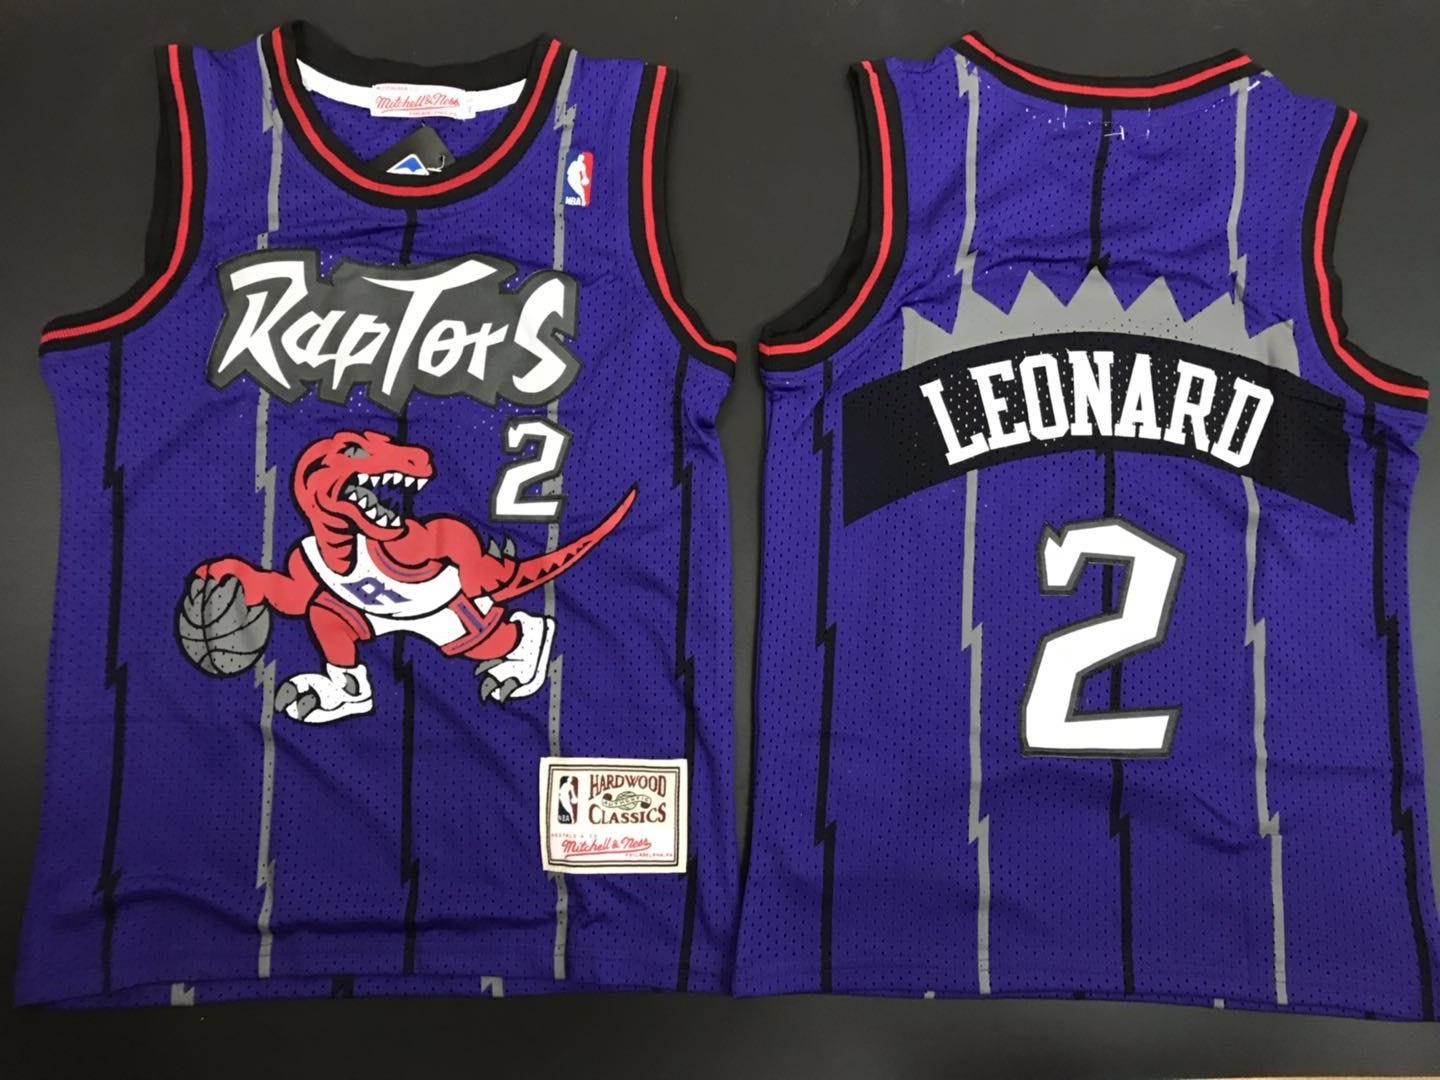 Men's Toronto Raptors #2 Kawhi Leonard Blue Swingman Stitched NBA Jersey